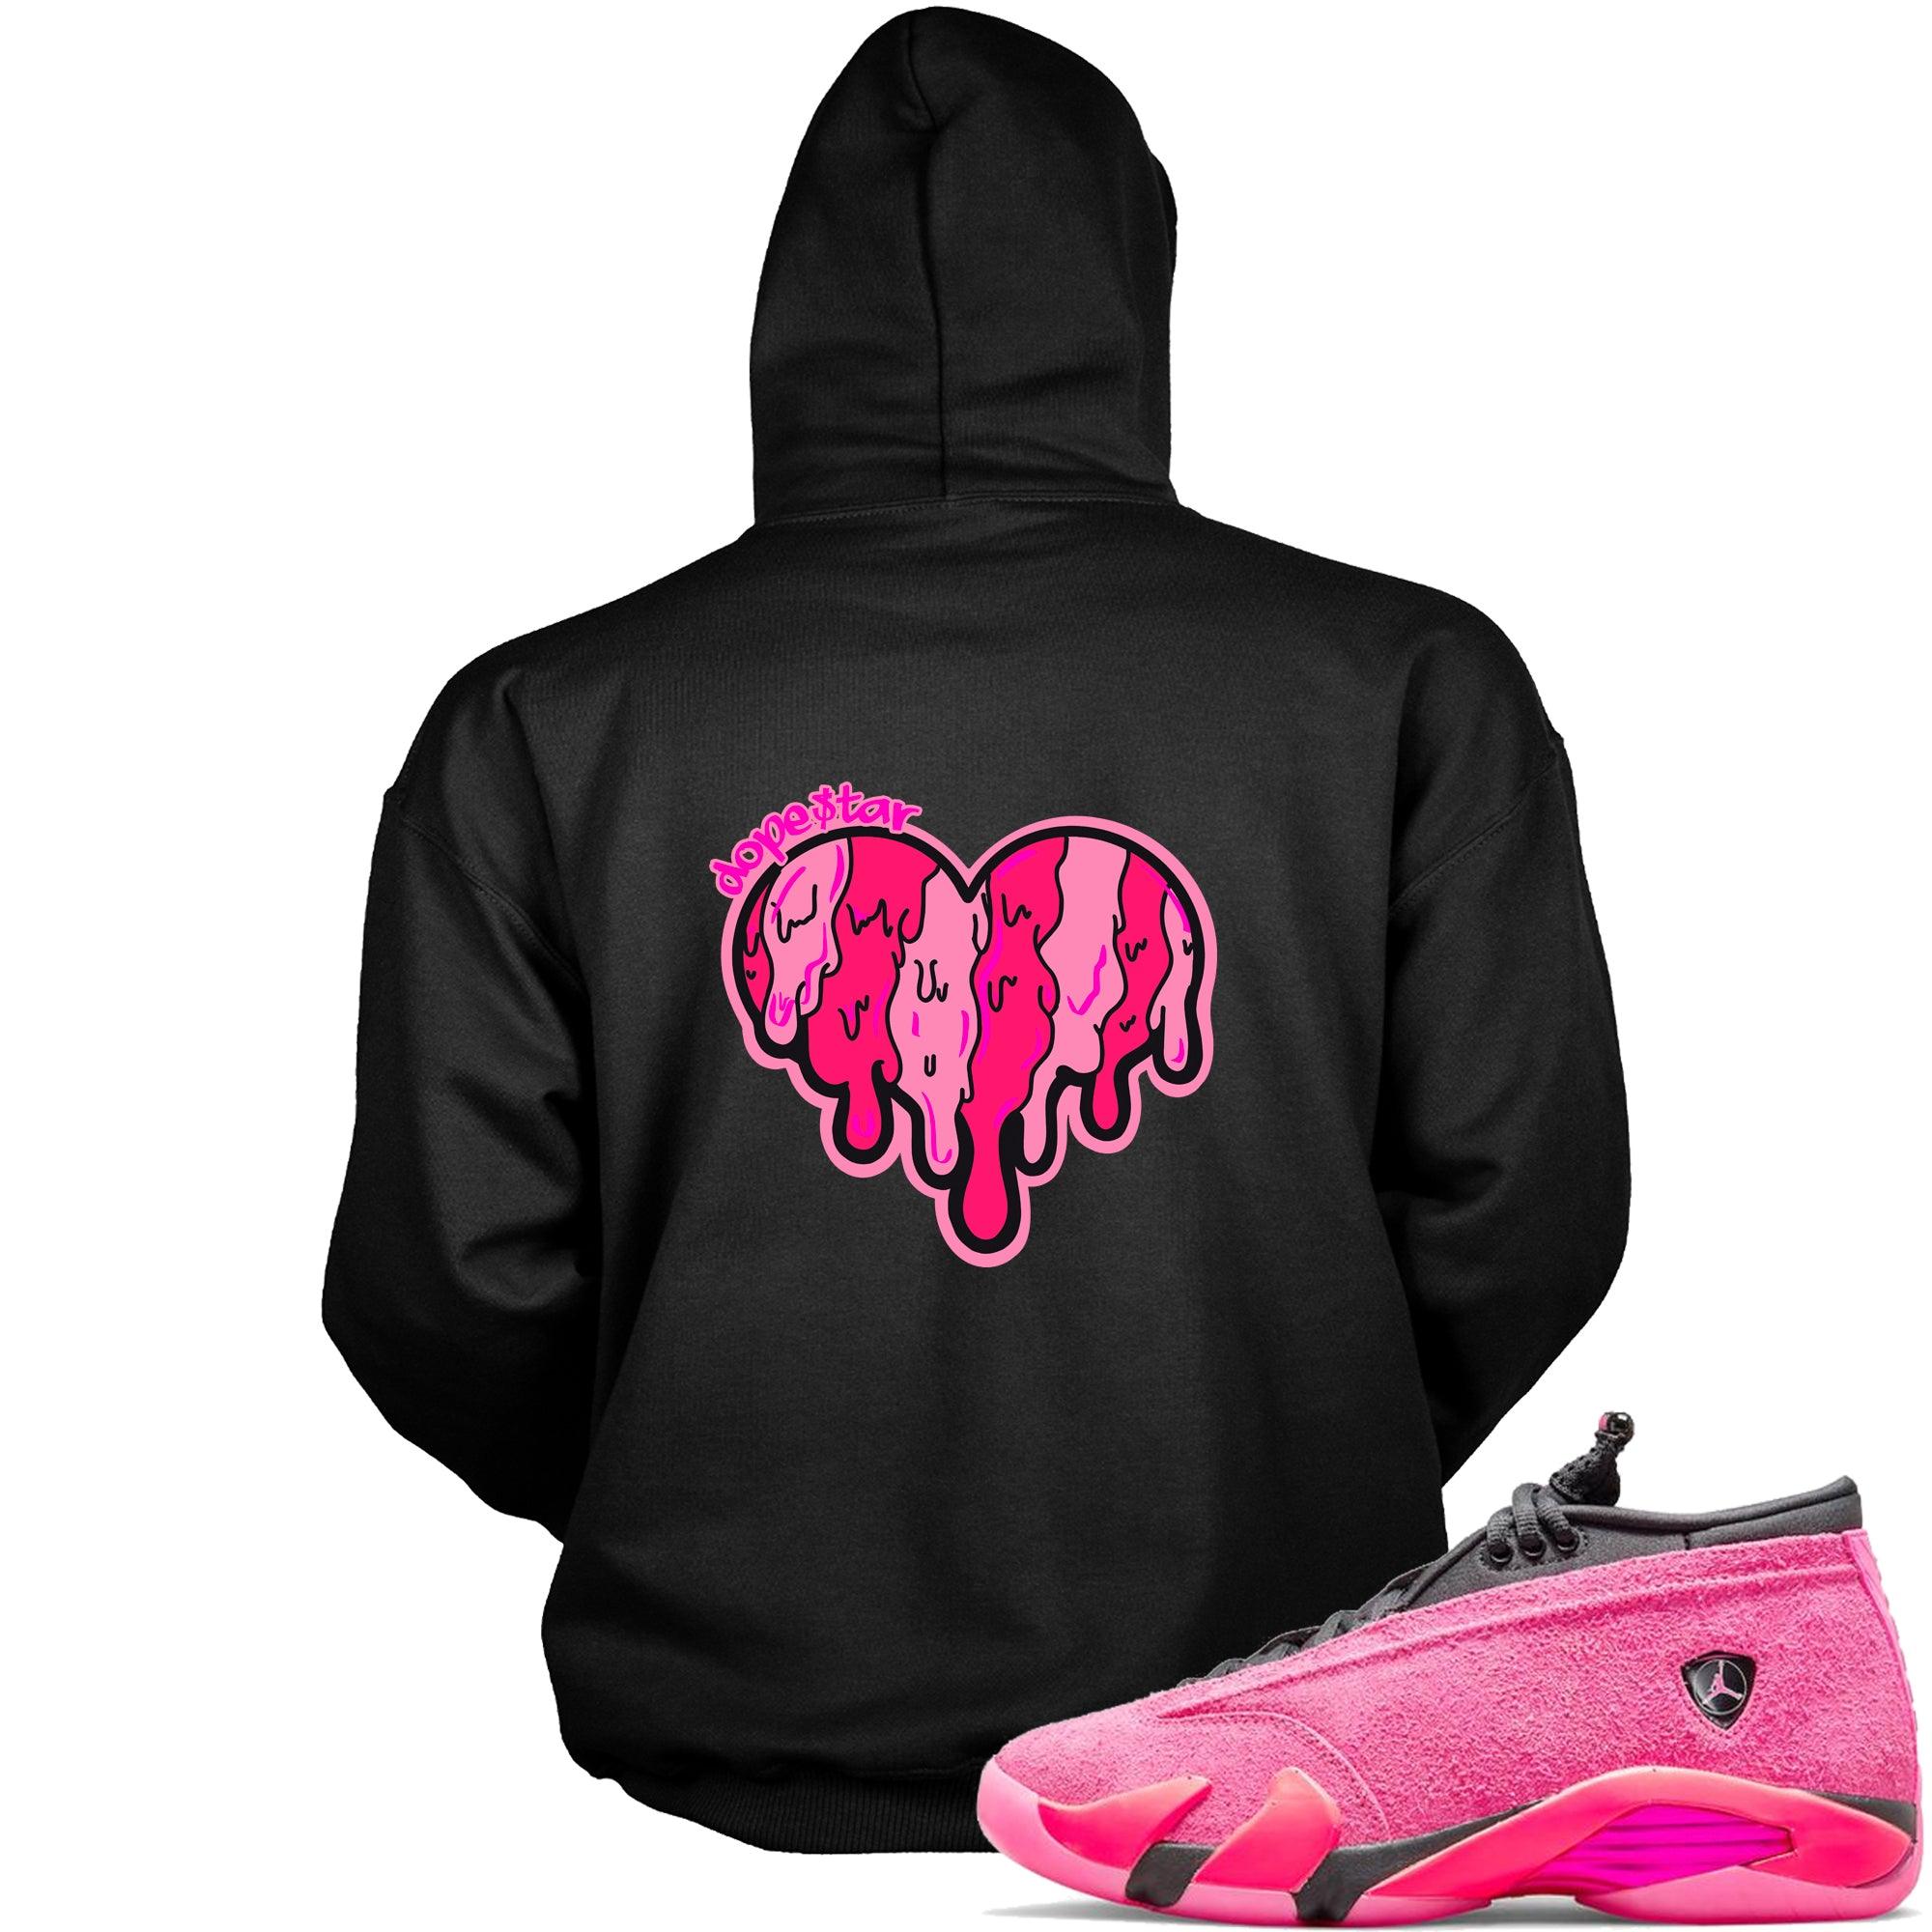 Melting Heart Sneaker Sweatshirt AJ 14s Low Shocking Pink photo